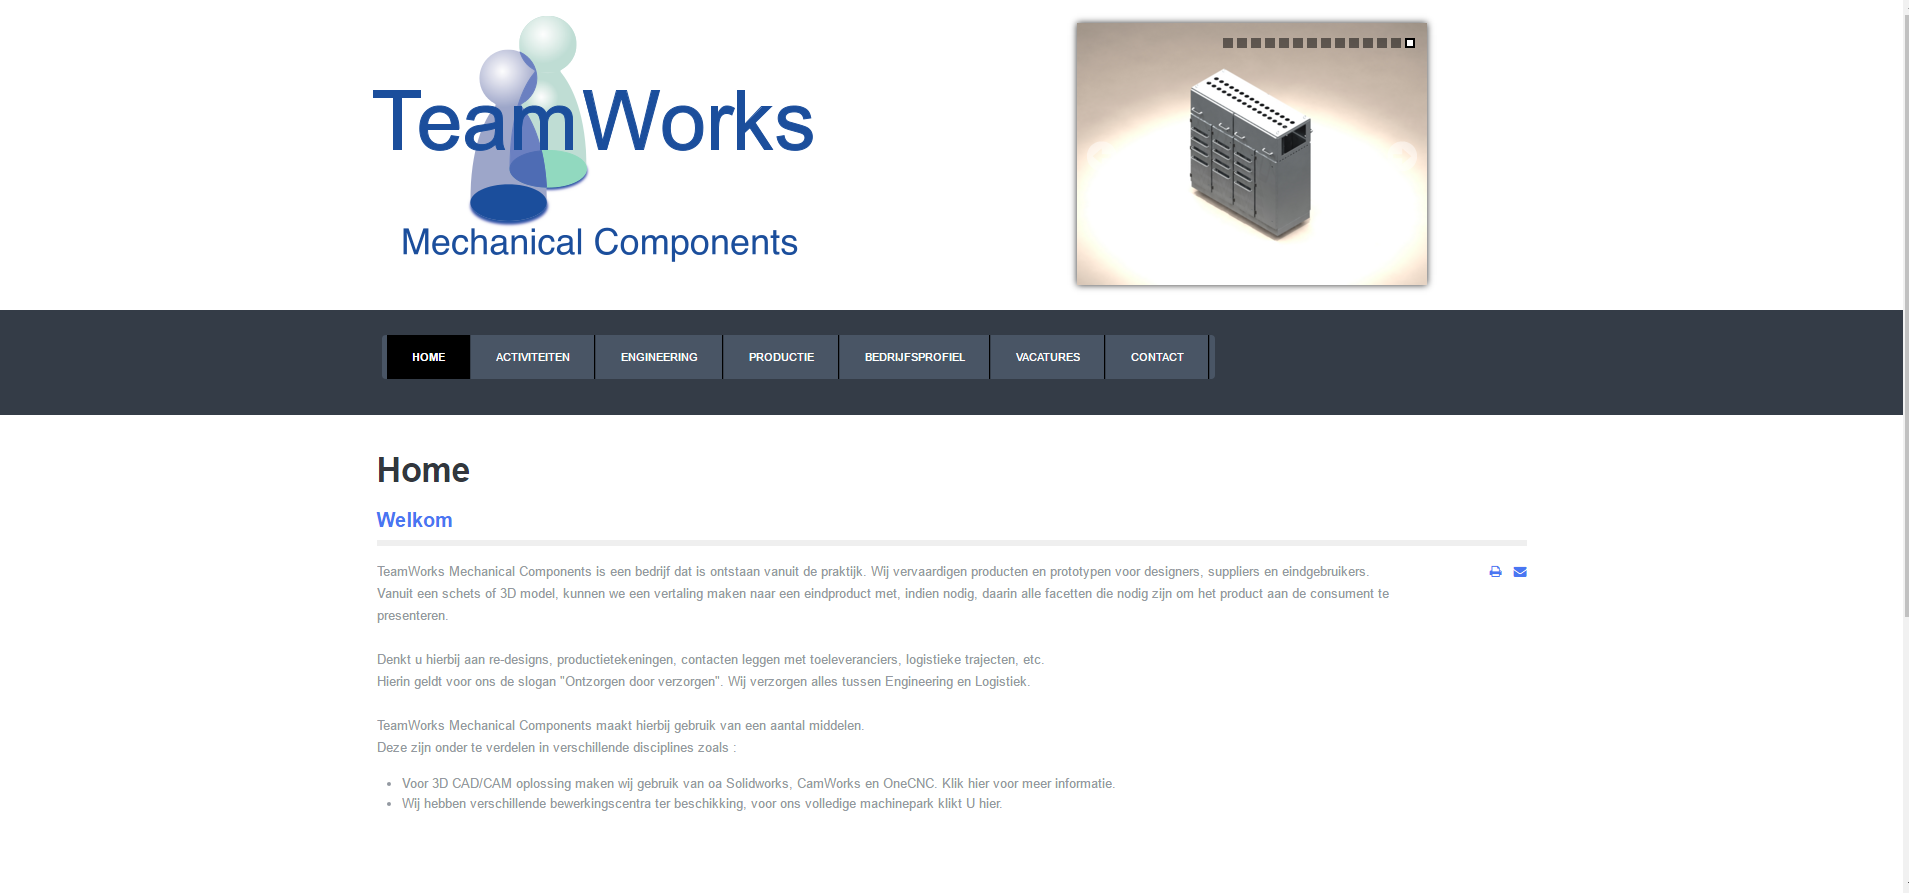 TeamWorks Mechanical Components